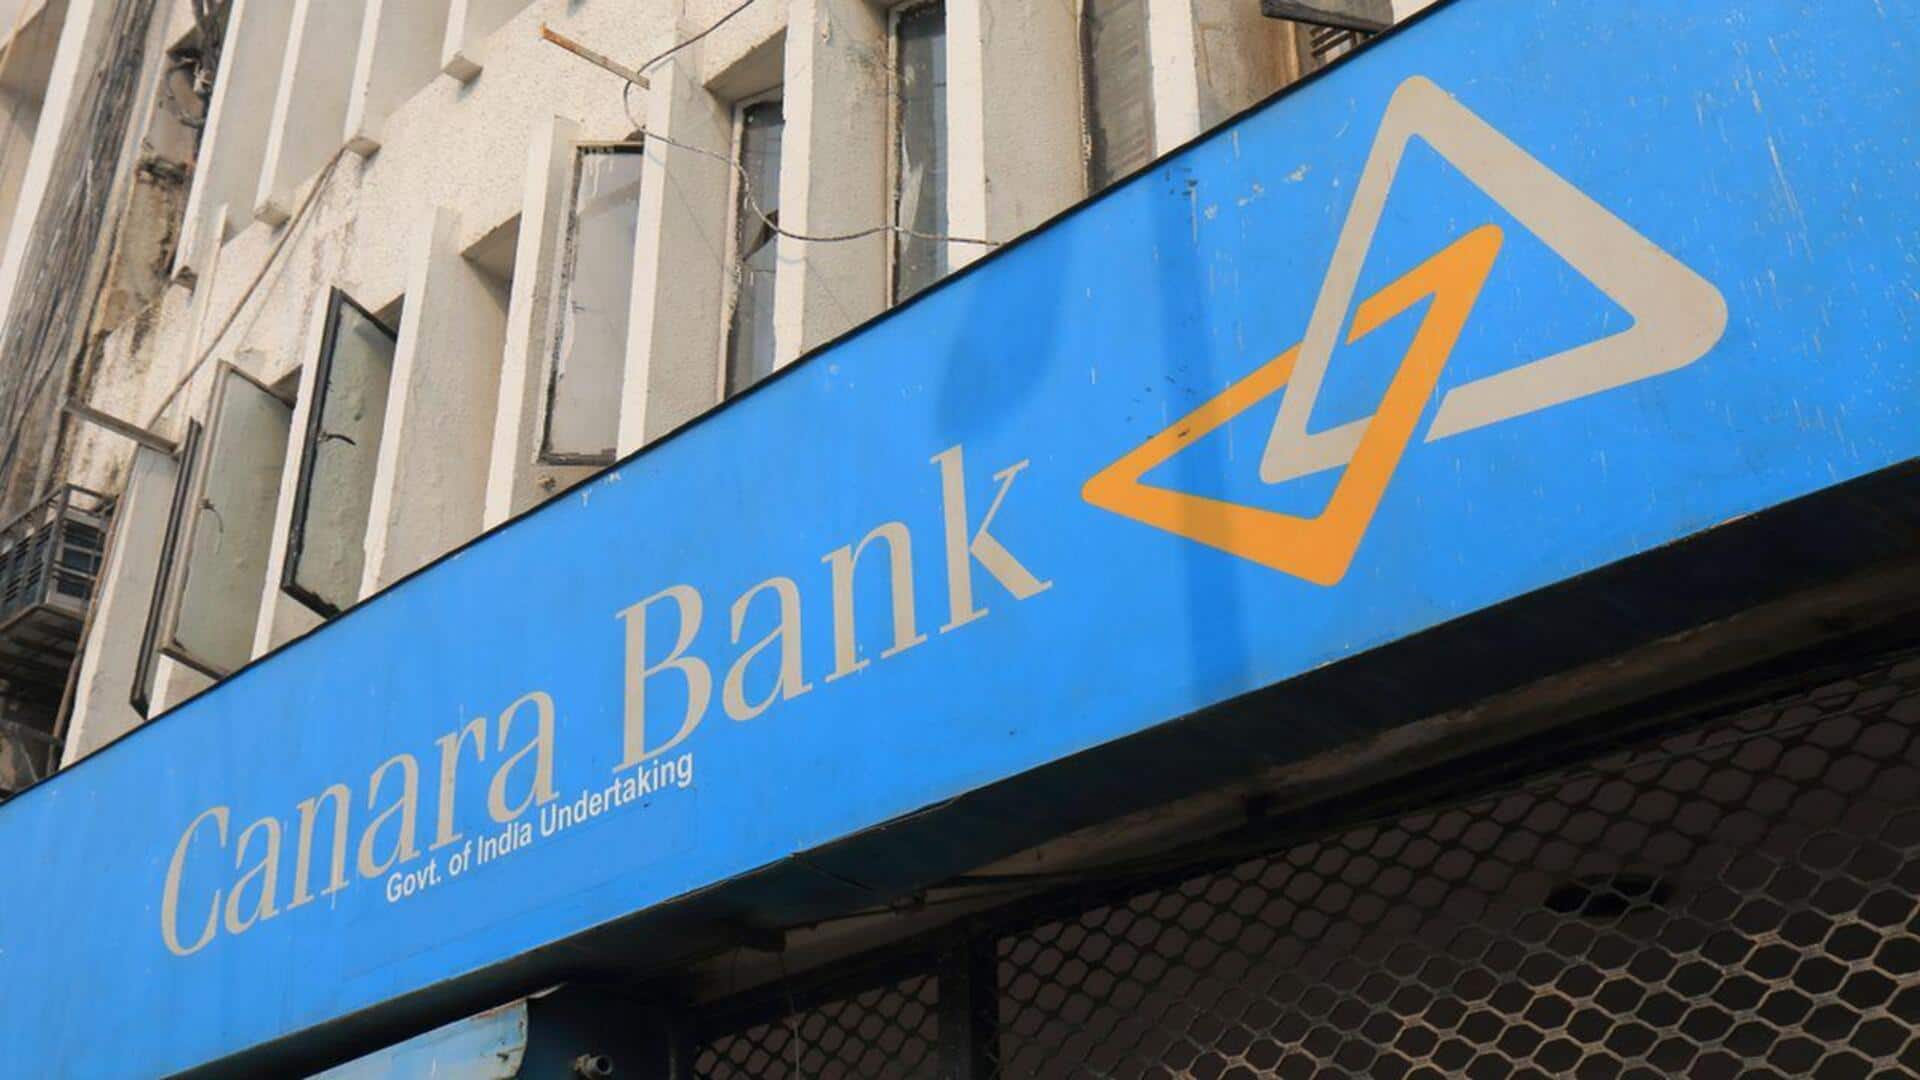 Canara Bank's social media handle on X hacked; username altered